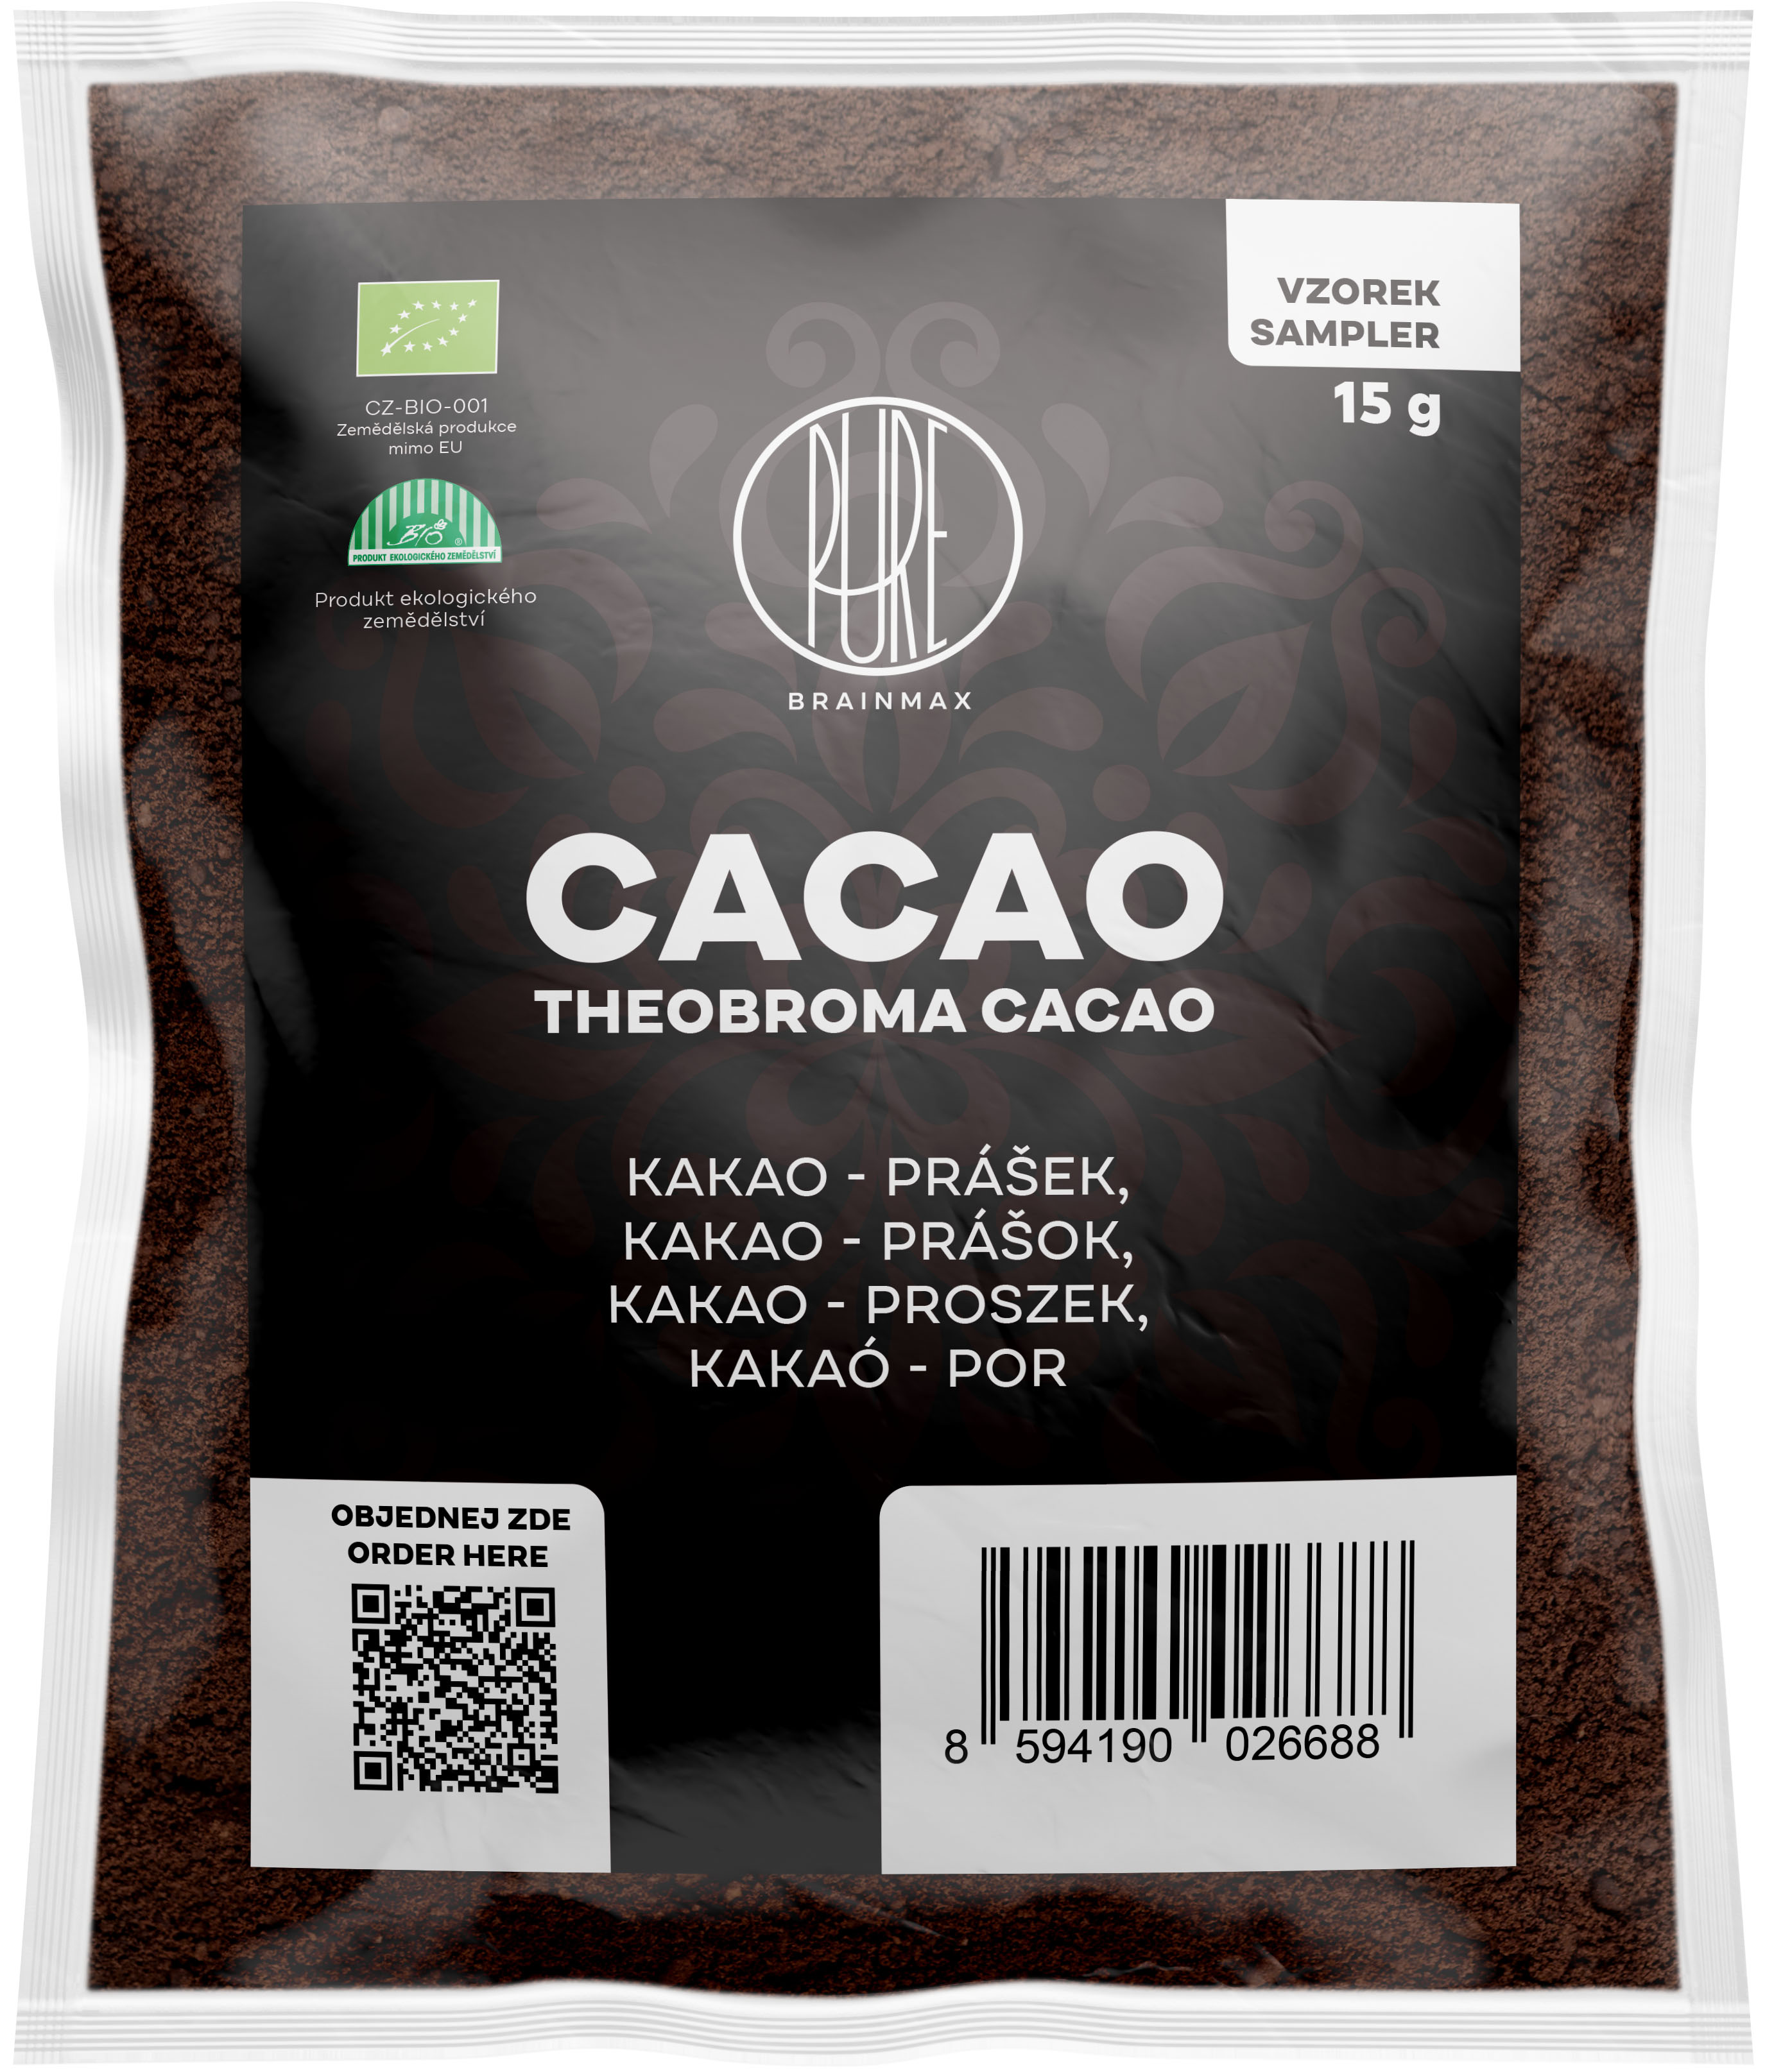 Levně BrainMax Pure Cacao, Bio Kakao z Peru, sampler 15 g *CZ-BIO-001 certifikát